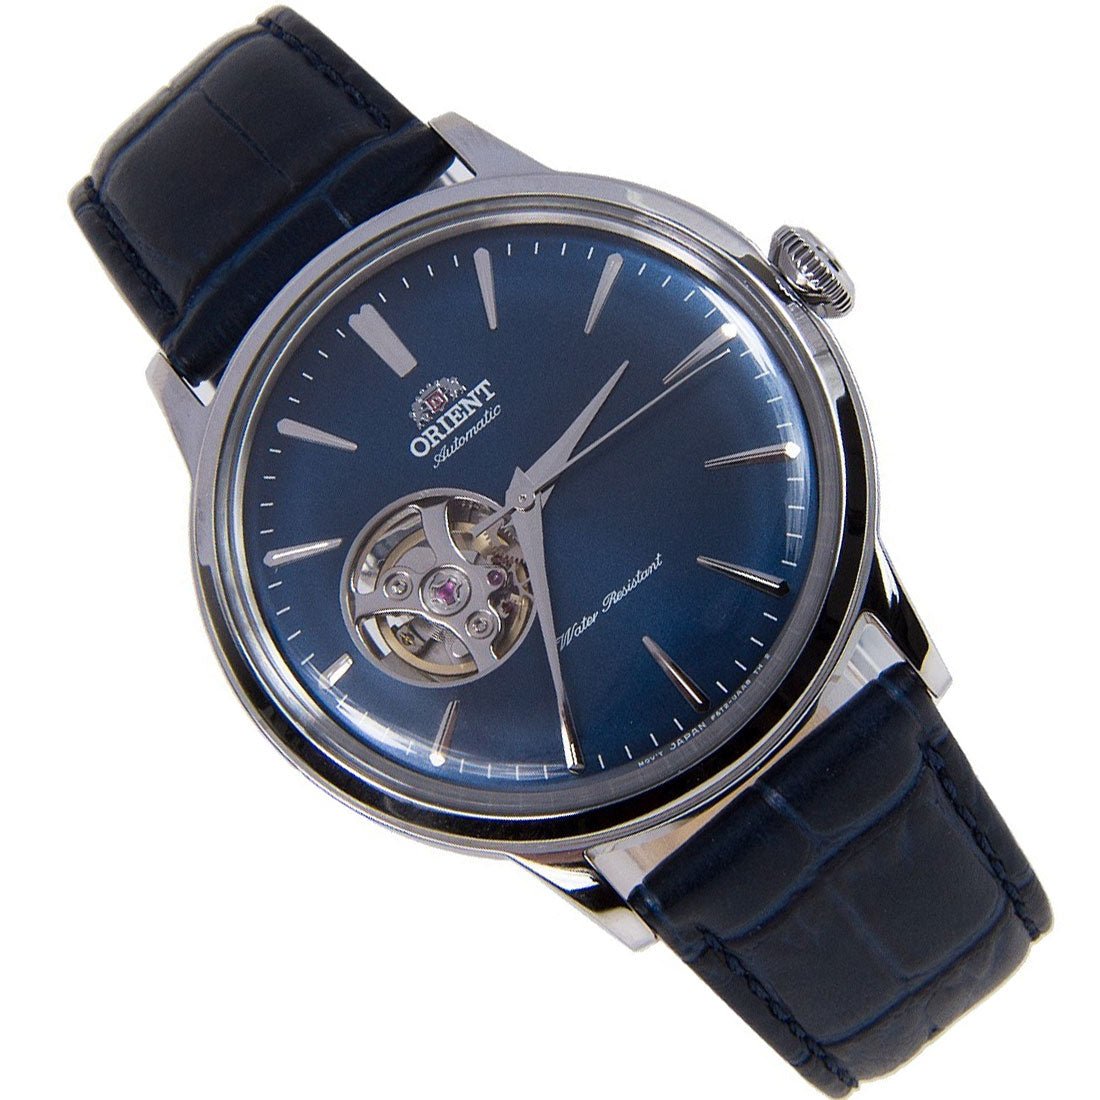 Orient Mechanical Blue Open Heart RA-AG0005L10B RA-AG0005L Leather Watch -Orient